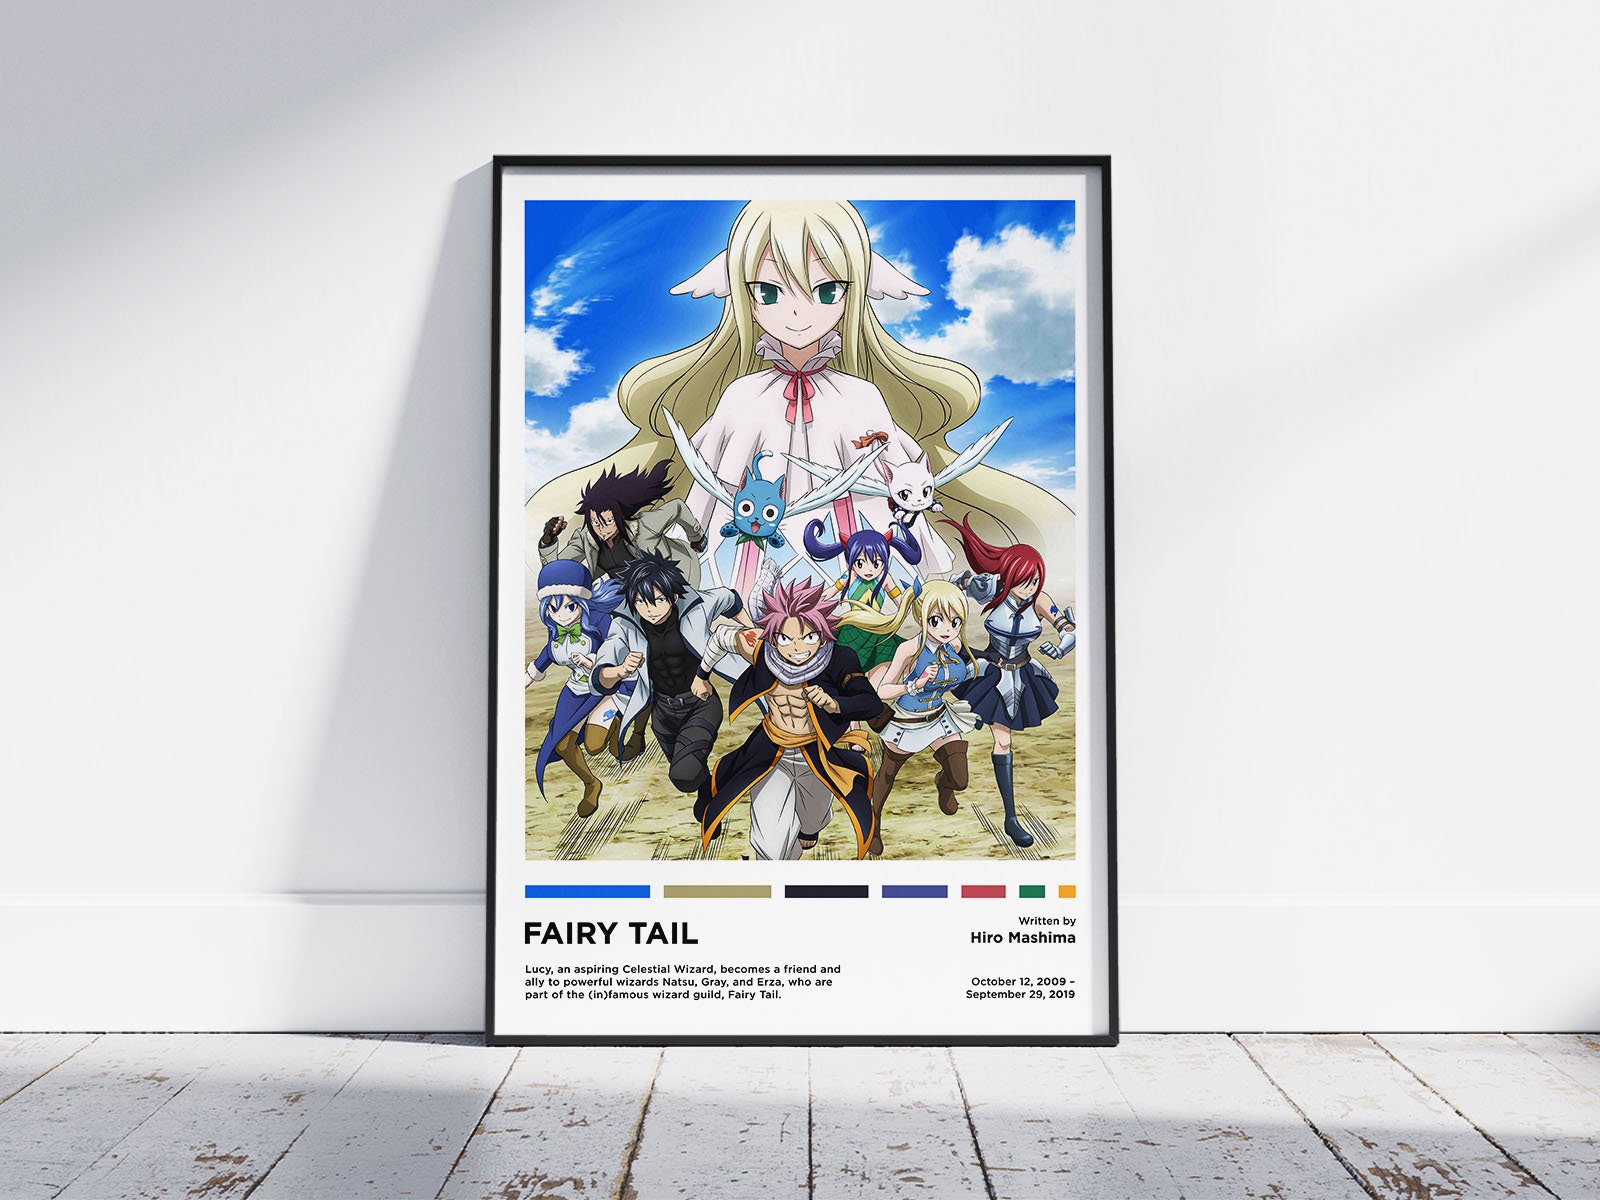 Fairy Tail Lucy Heartfilia Name Anime Metal Print